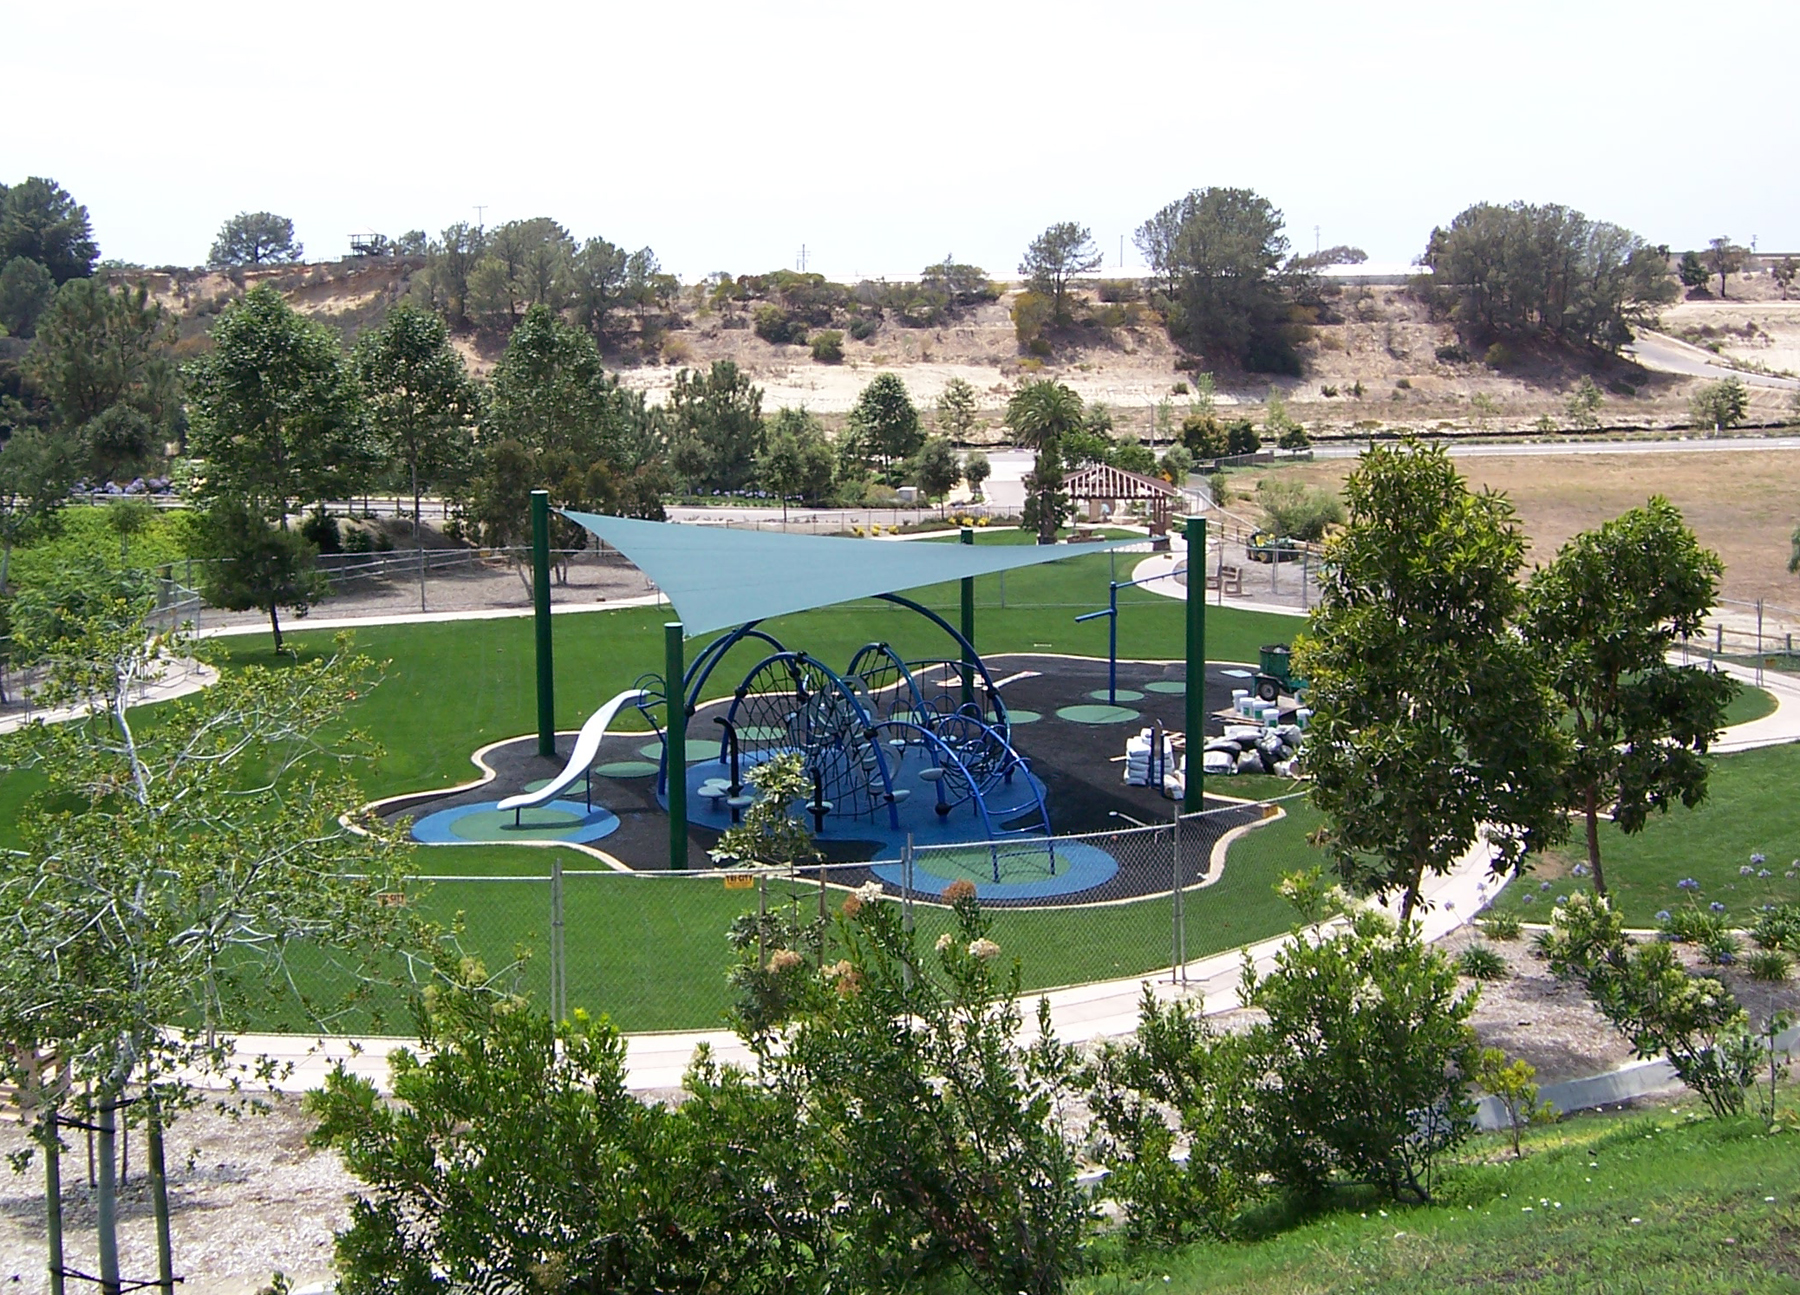 blue playground equipment in park